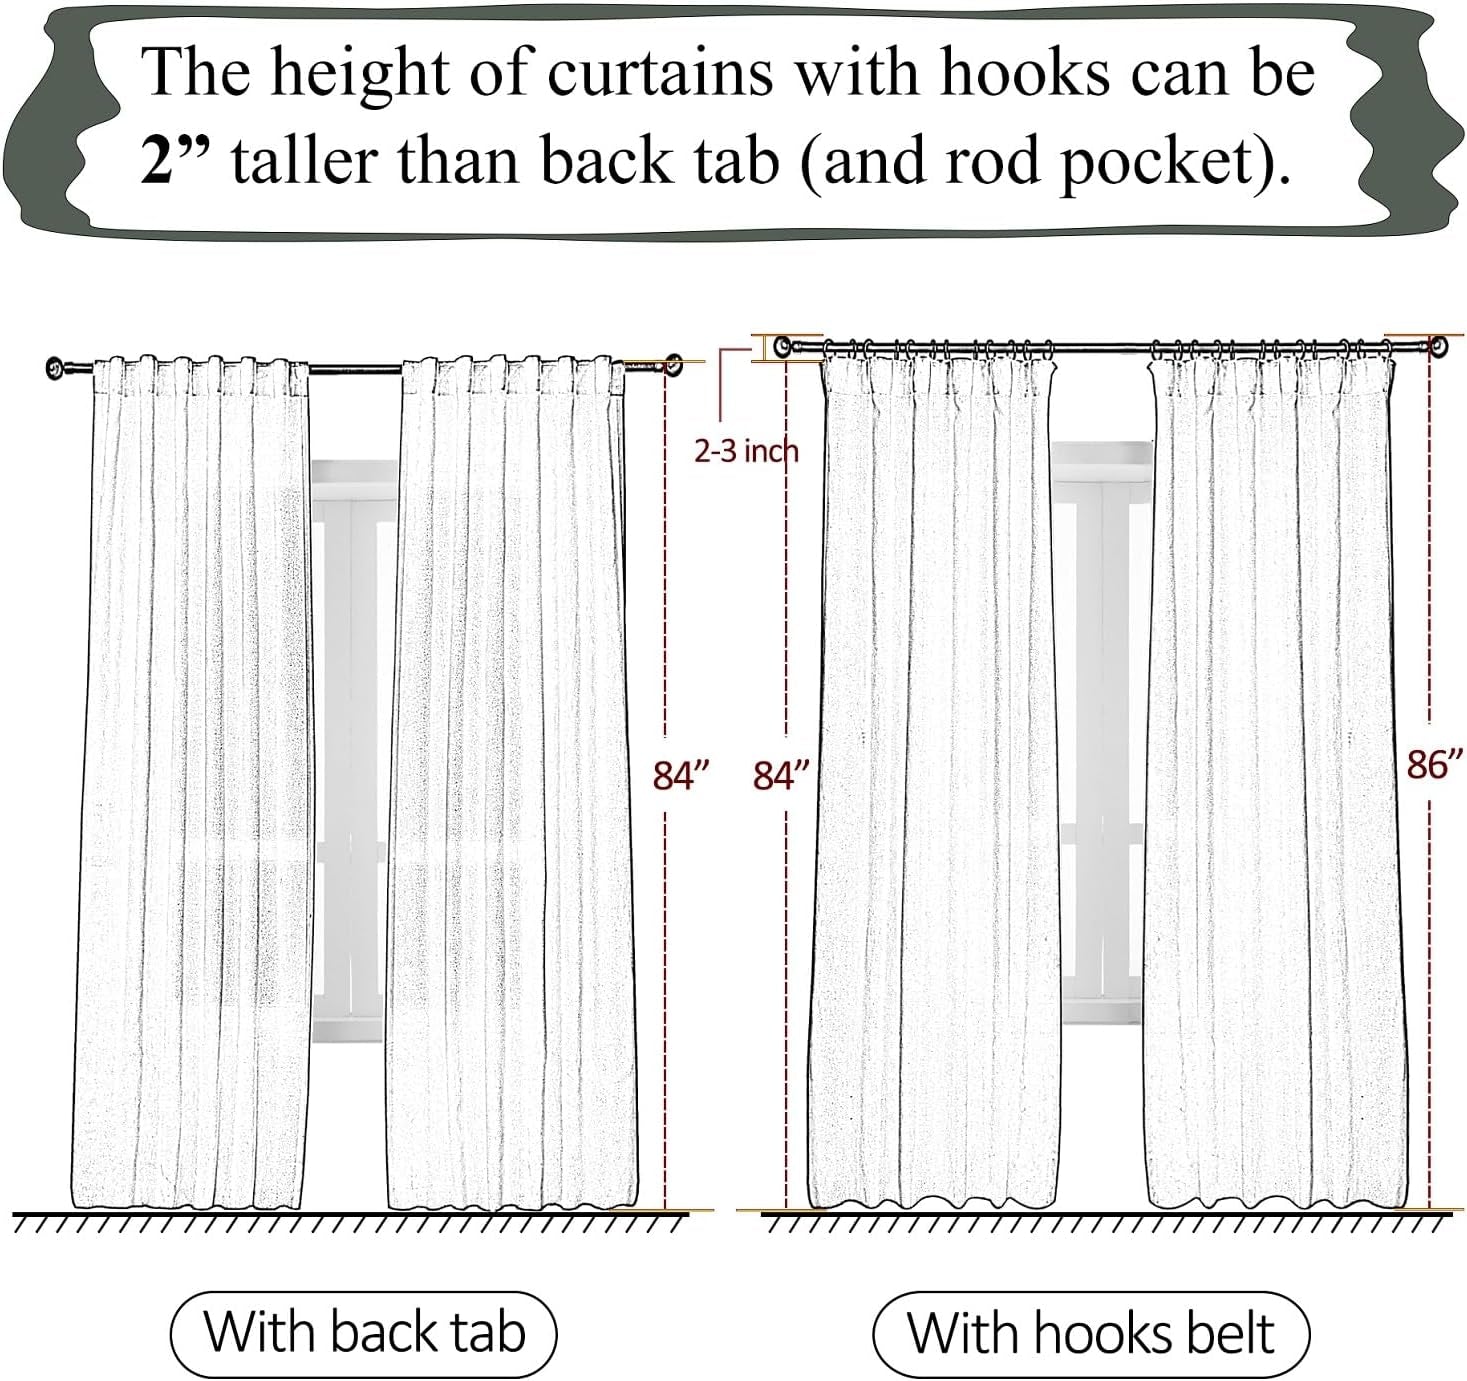 Ftinala Linen Curtains 96 Inches Long Tan Sheer Curtains 96 Inch Pinch Pleated Curtains with Hooks for Track System Light Filtering Curtains Living Room Drapes Cream Beige | Back Tab & Pocket  Ftinala   